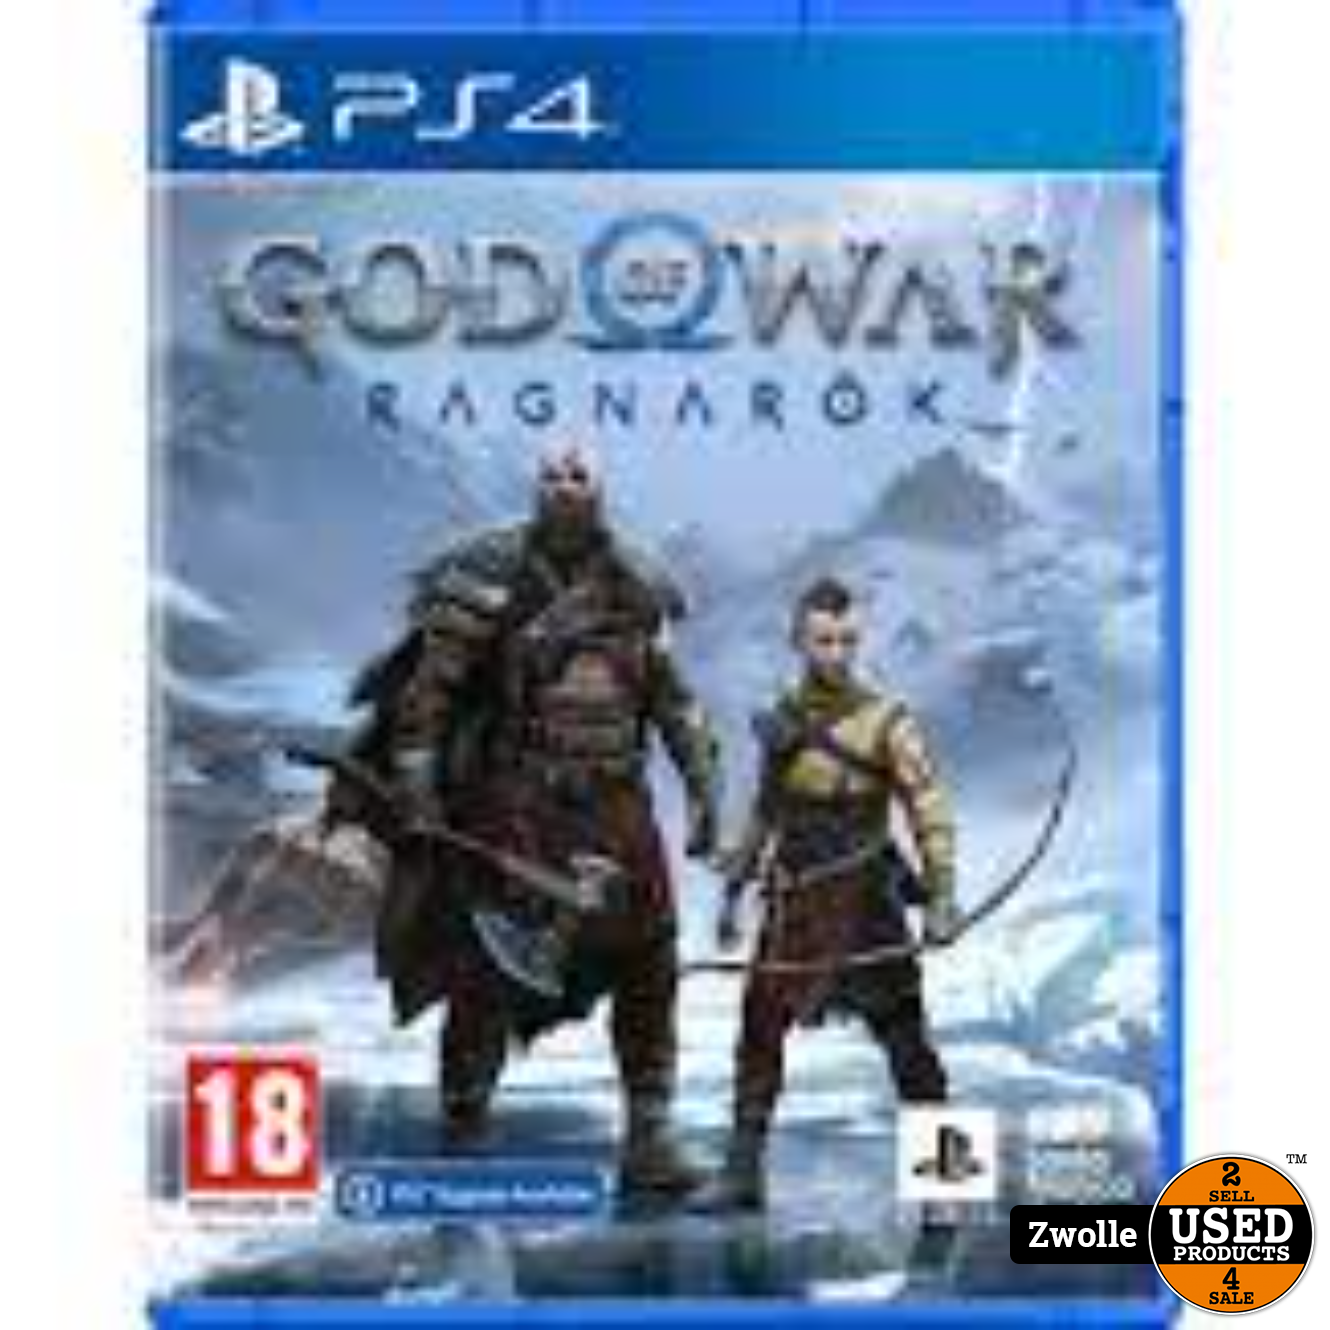 Australië terugtrekken handicap Playstation 4 game God of War Ragnarok - Used Products Zwolle